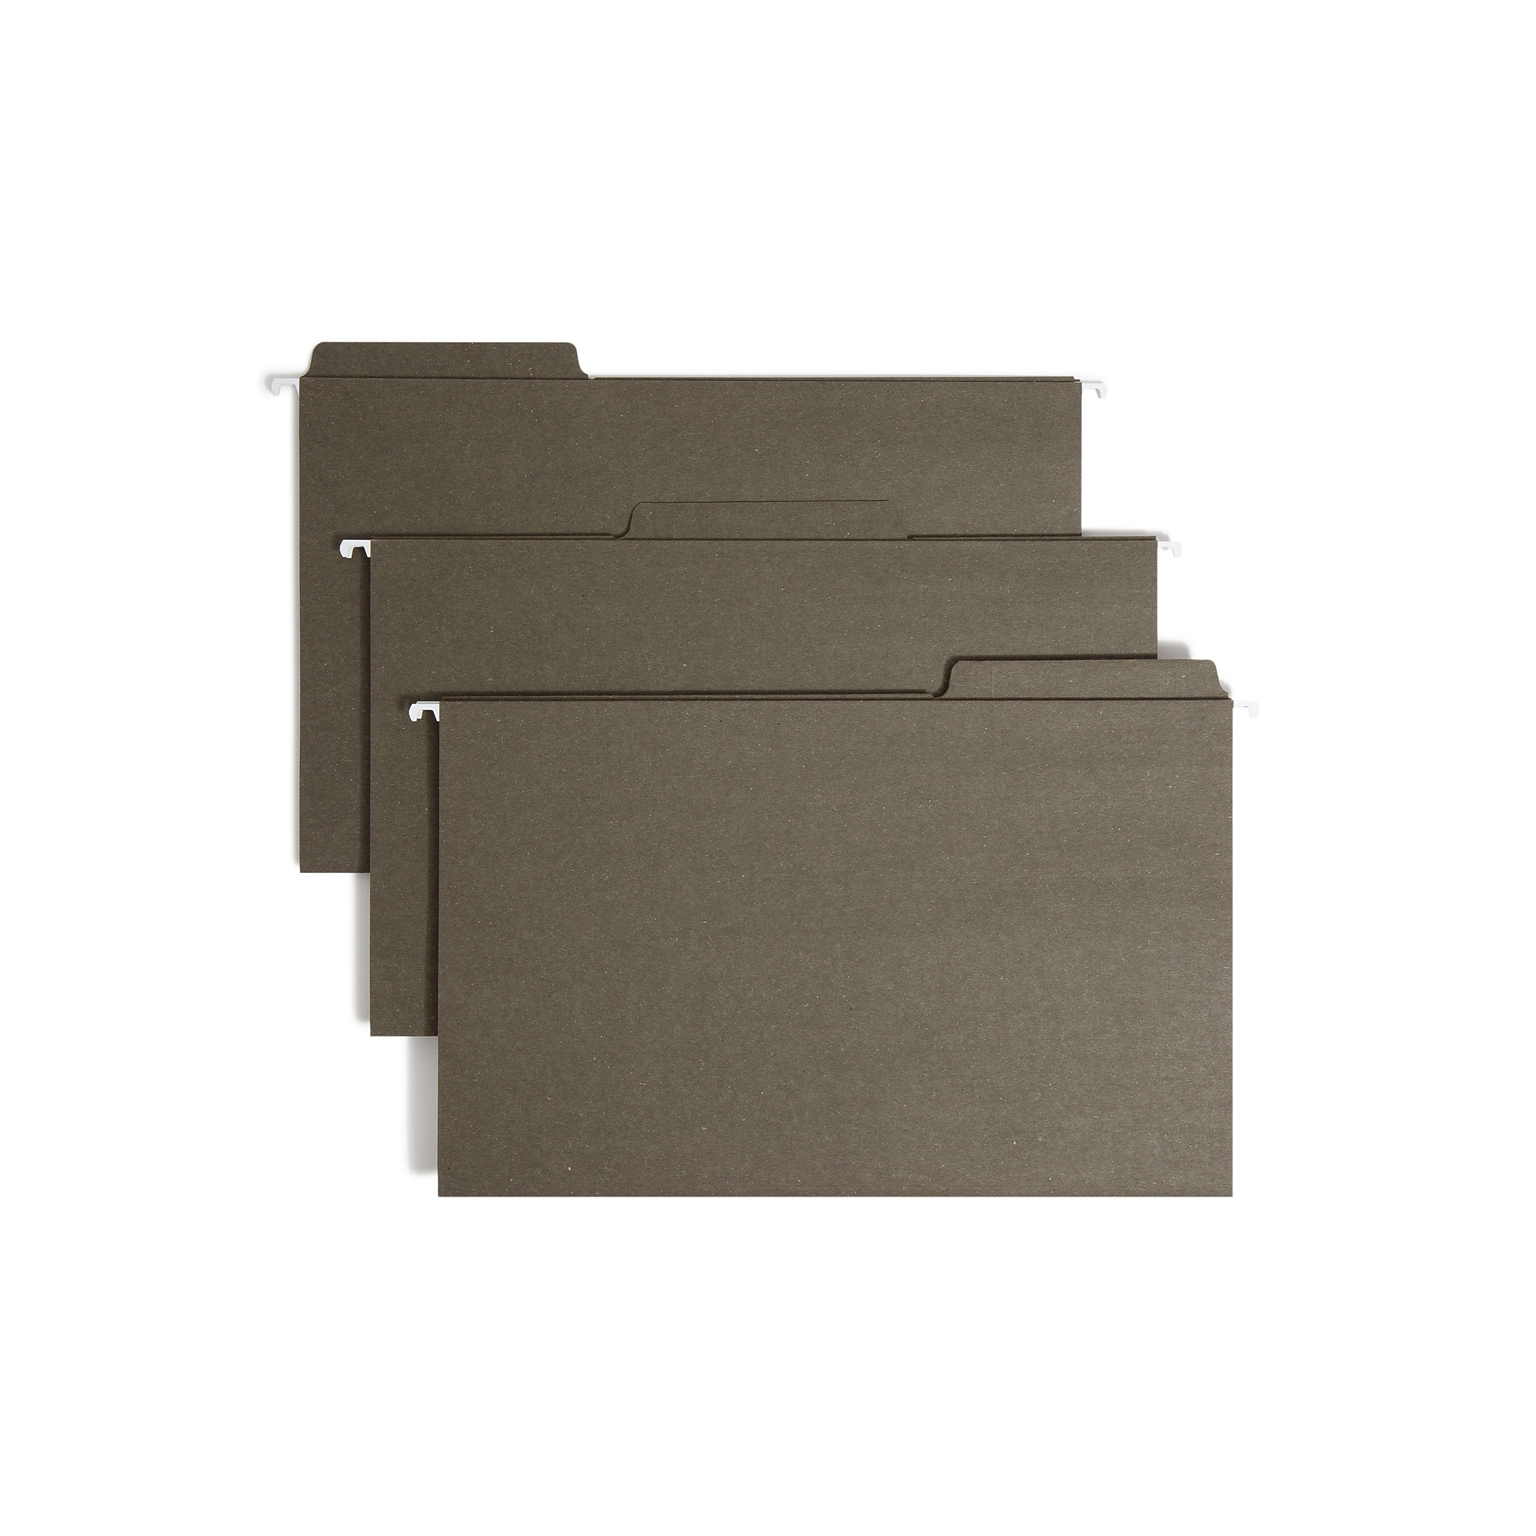 Smead FasTab Recycled Hanging File Folder, 3-Tab Tab, Legal Size, Standard Green, 20/Box (64137)